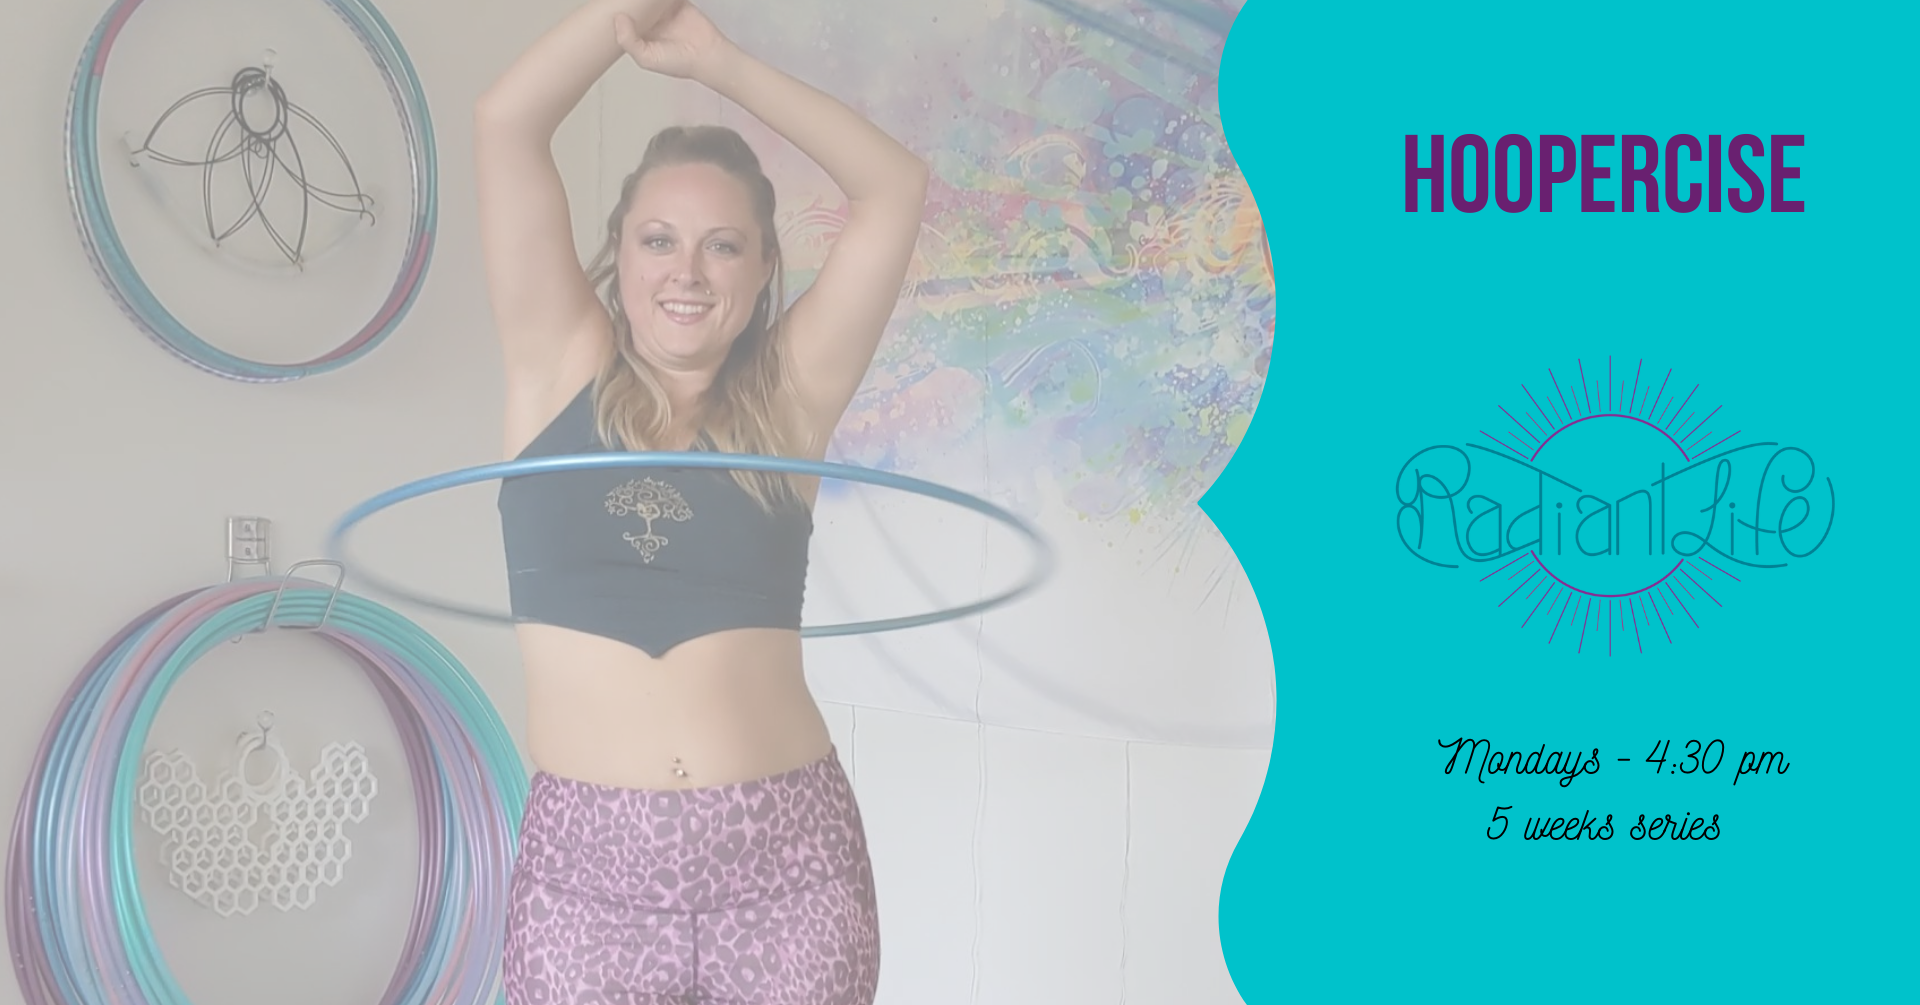 hula hoop fitness hoopercise